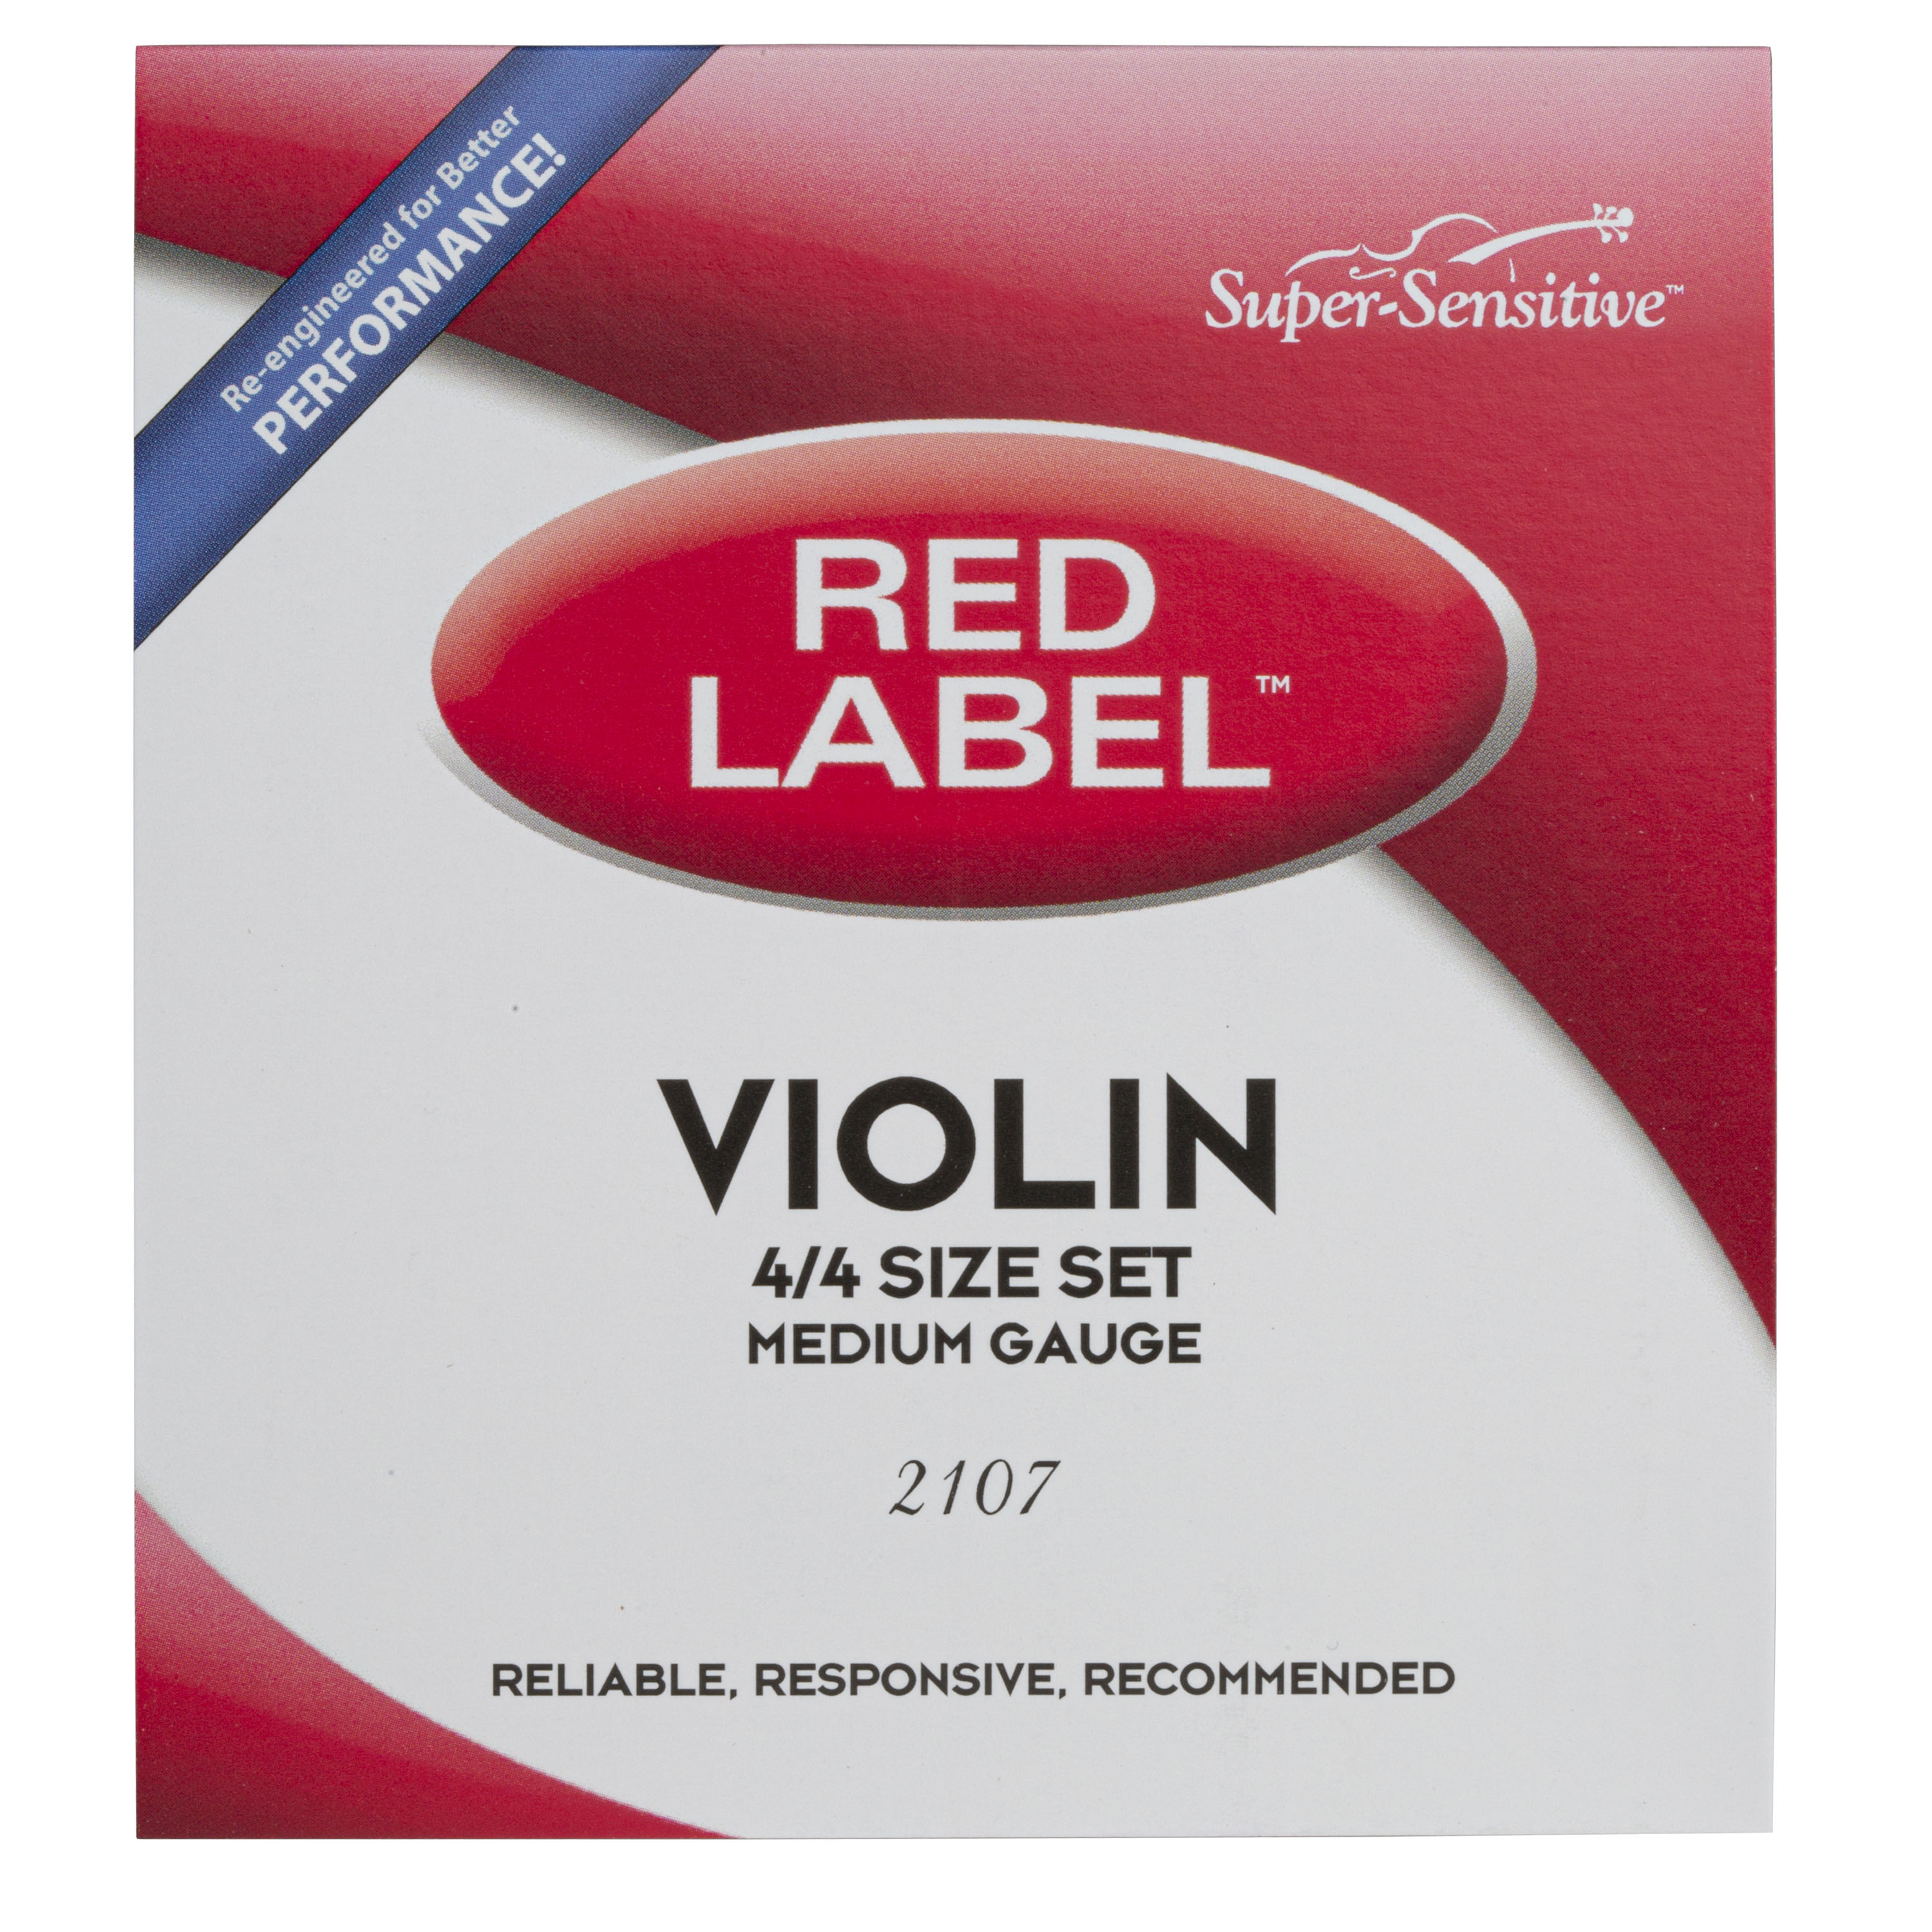 Red Label Super-Sensitive Violin Strings